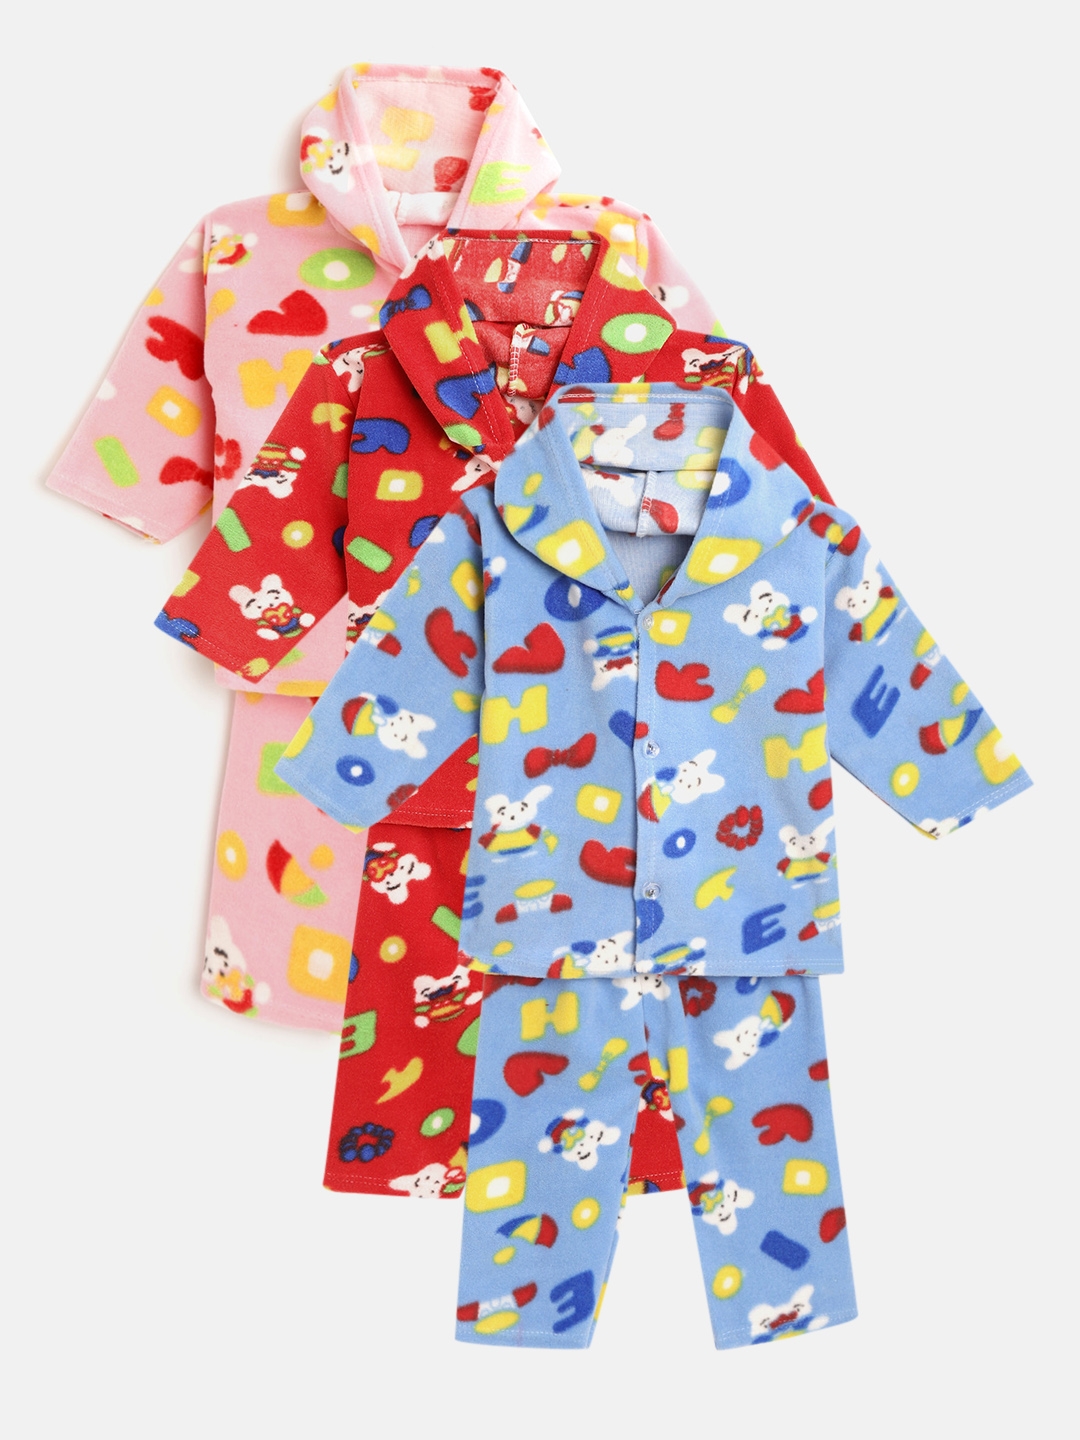 MANZON Kids Pack of 3 Printed Clothing Sets